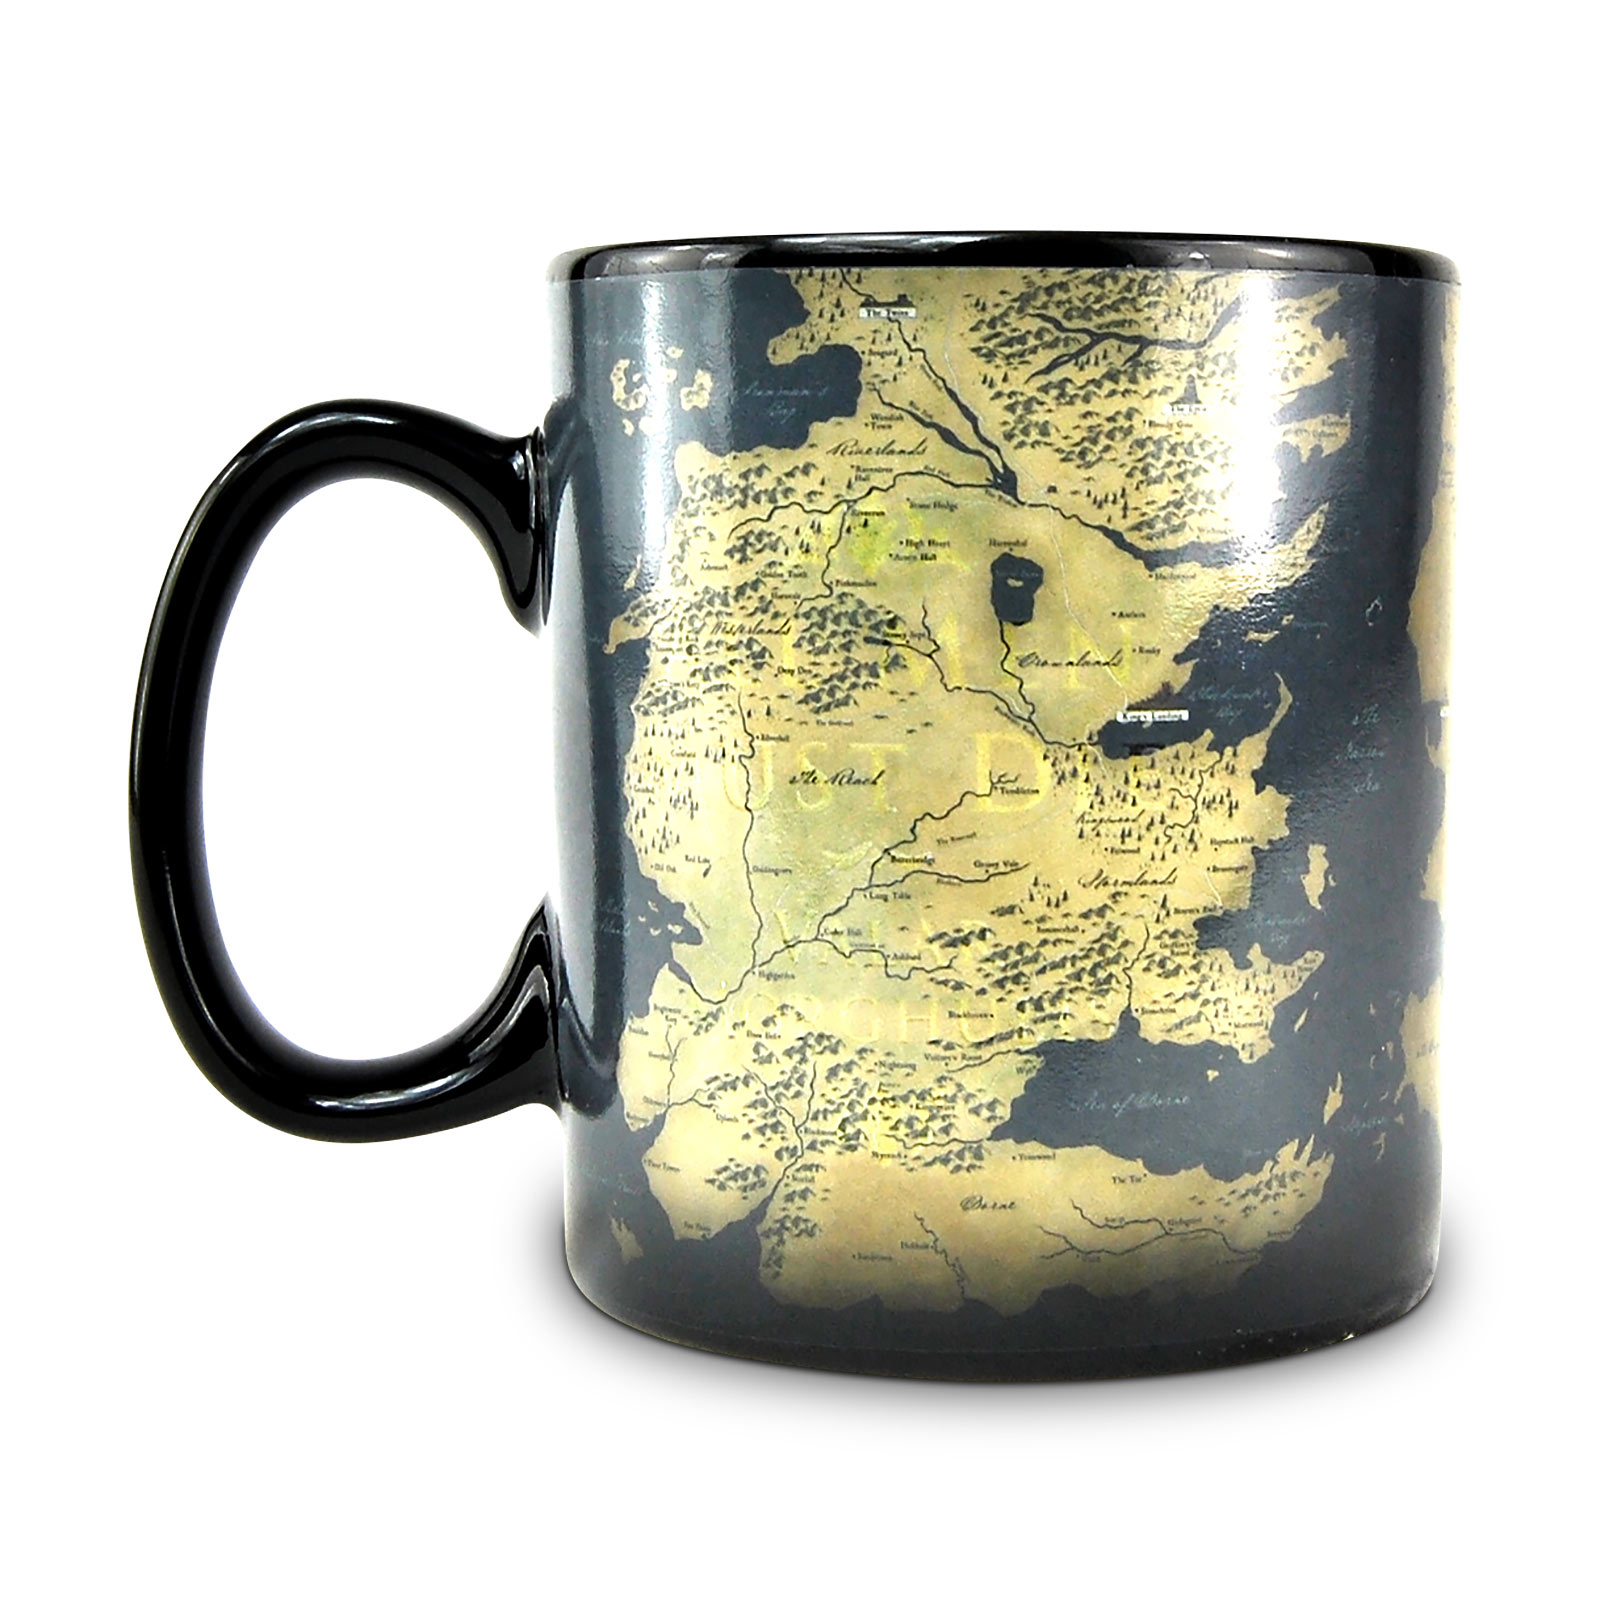 Game of Thrones - Westeros and Essos Thermochromic Mug